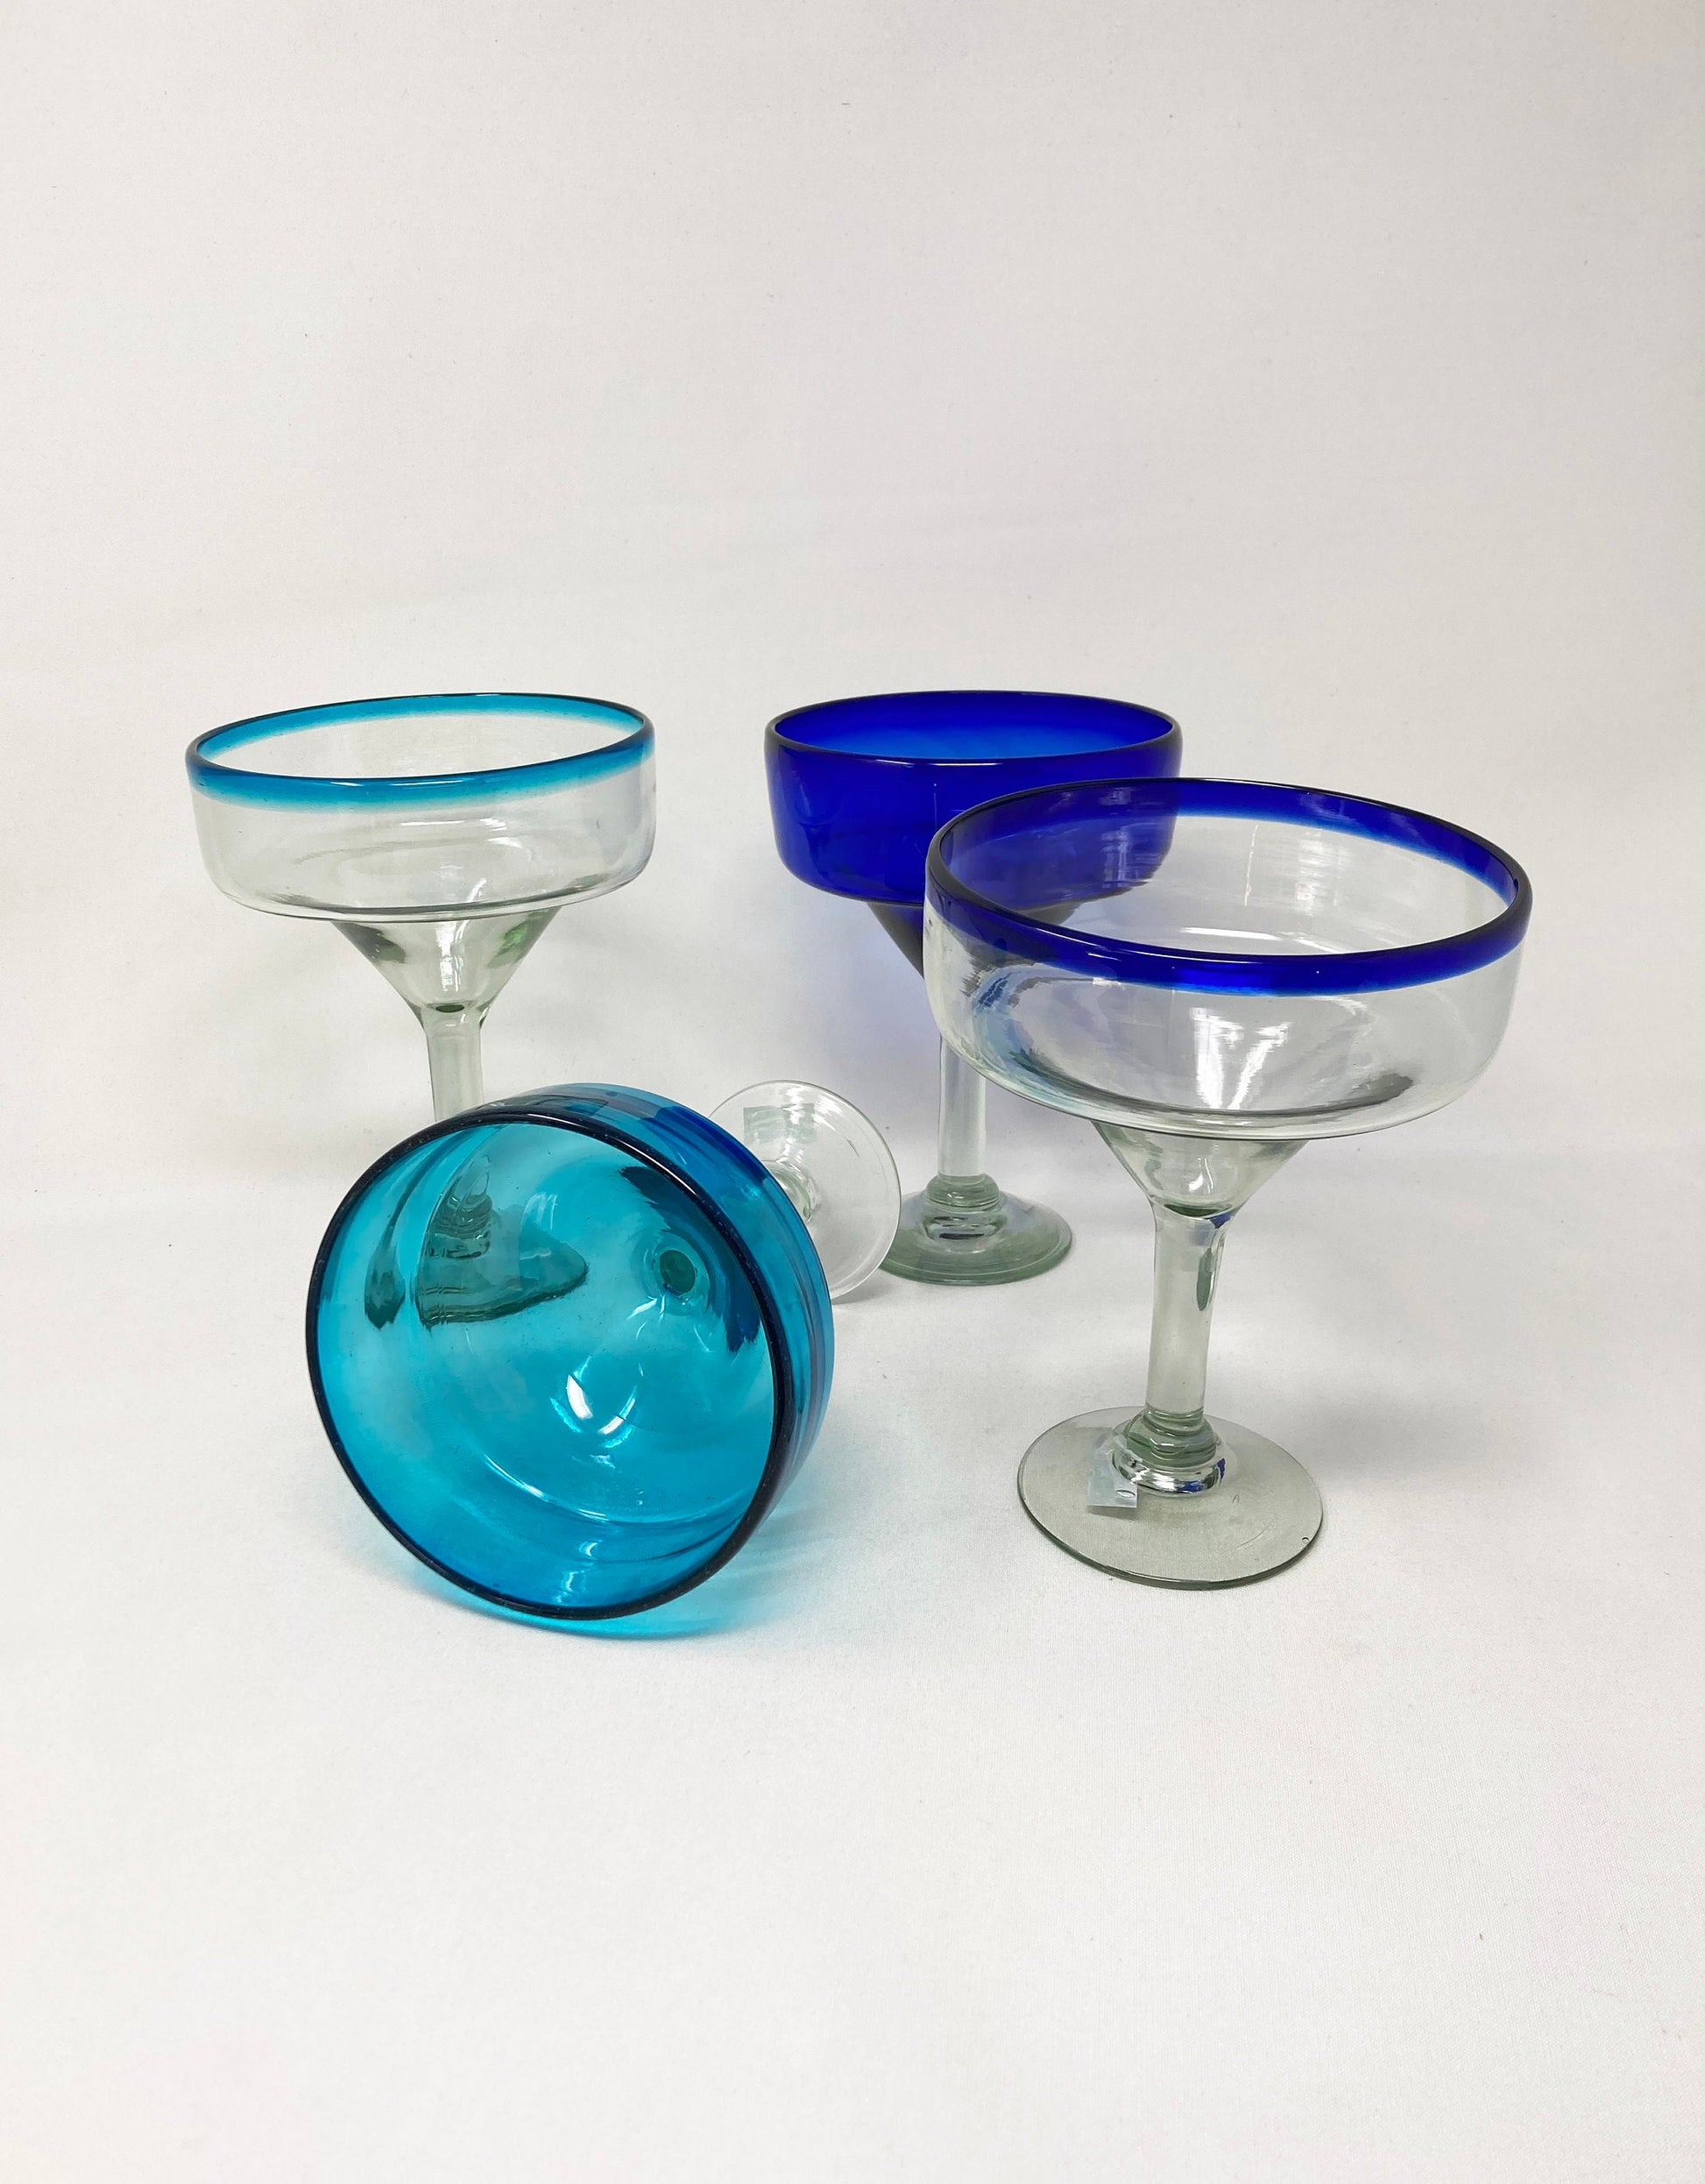 4 Hand Blown Margarita Glasses - The Blues Collection - Blue Dorado Designs